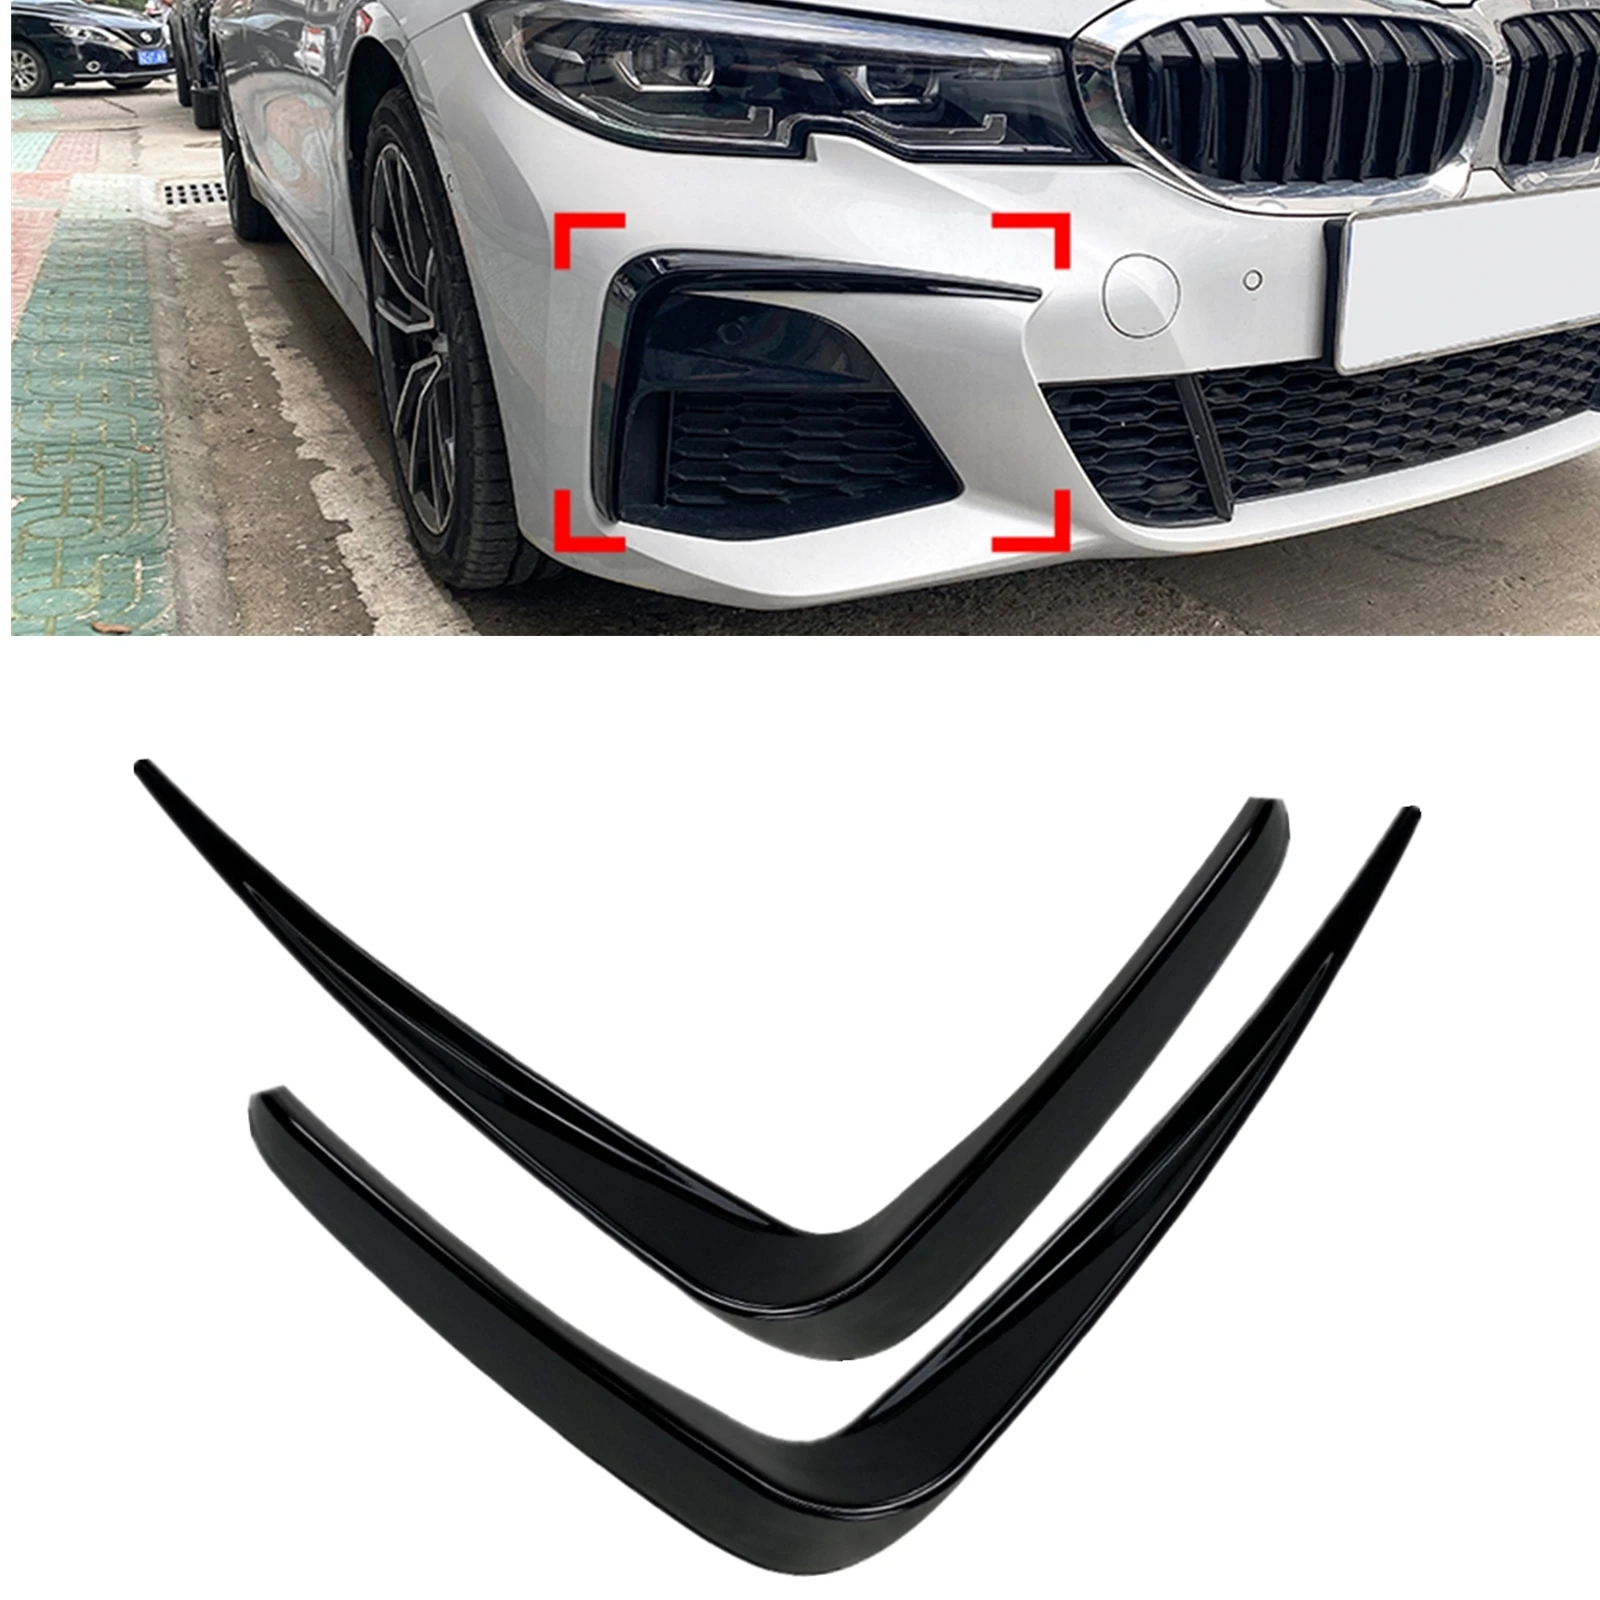 

2PCS Front Side Vent Fins Spoiler Canards Trim Sticker For BMW 3 Series G20 M Sport 320i 325i 2019 2020 2021 2022